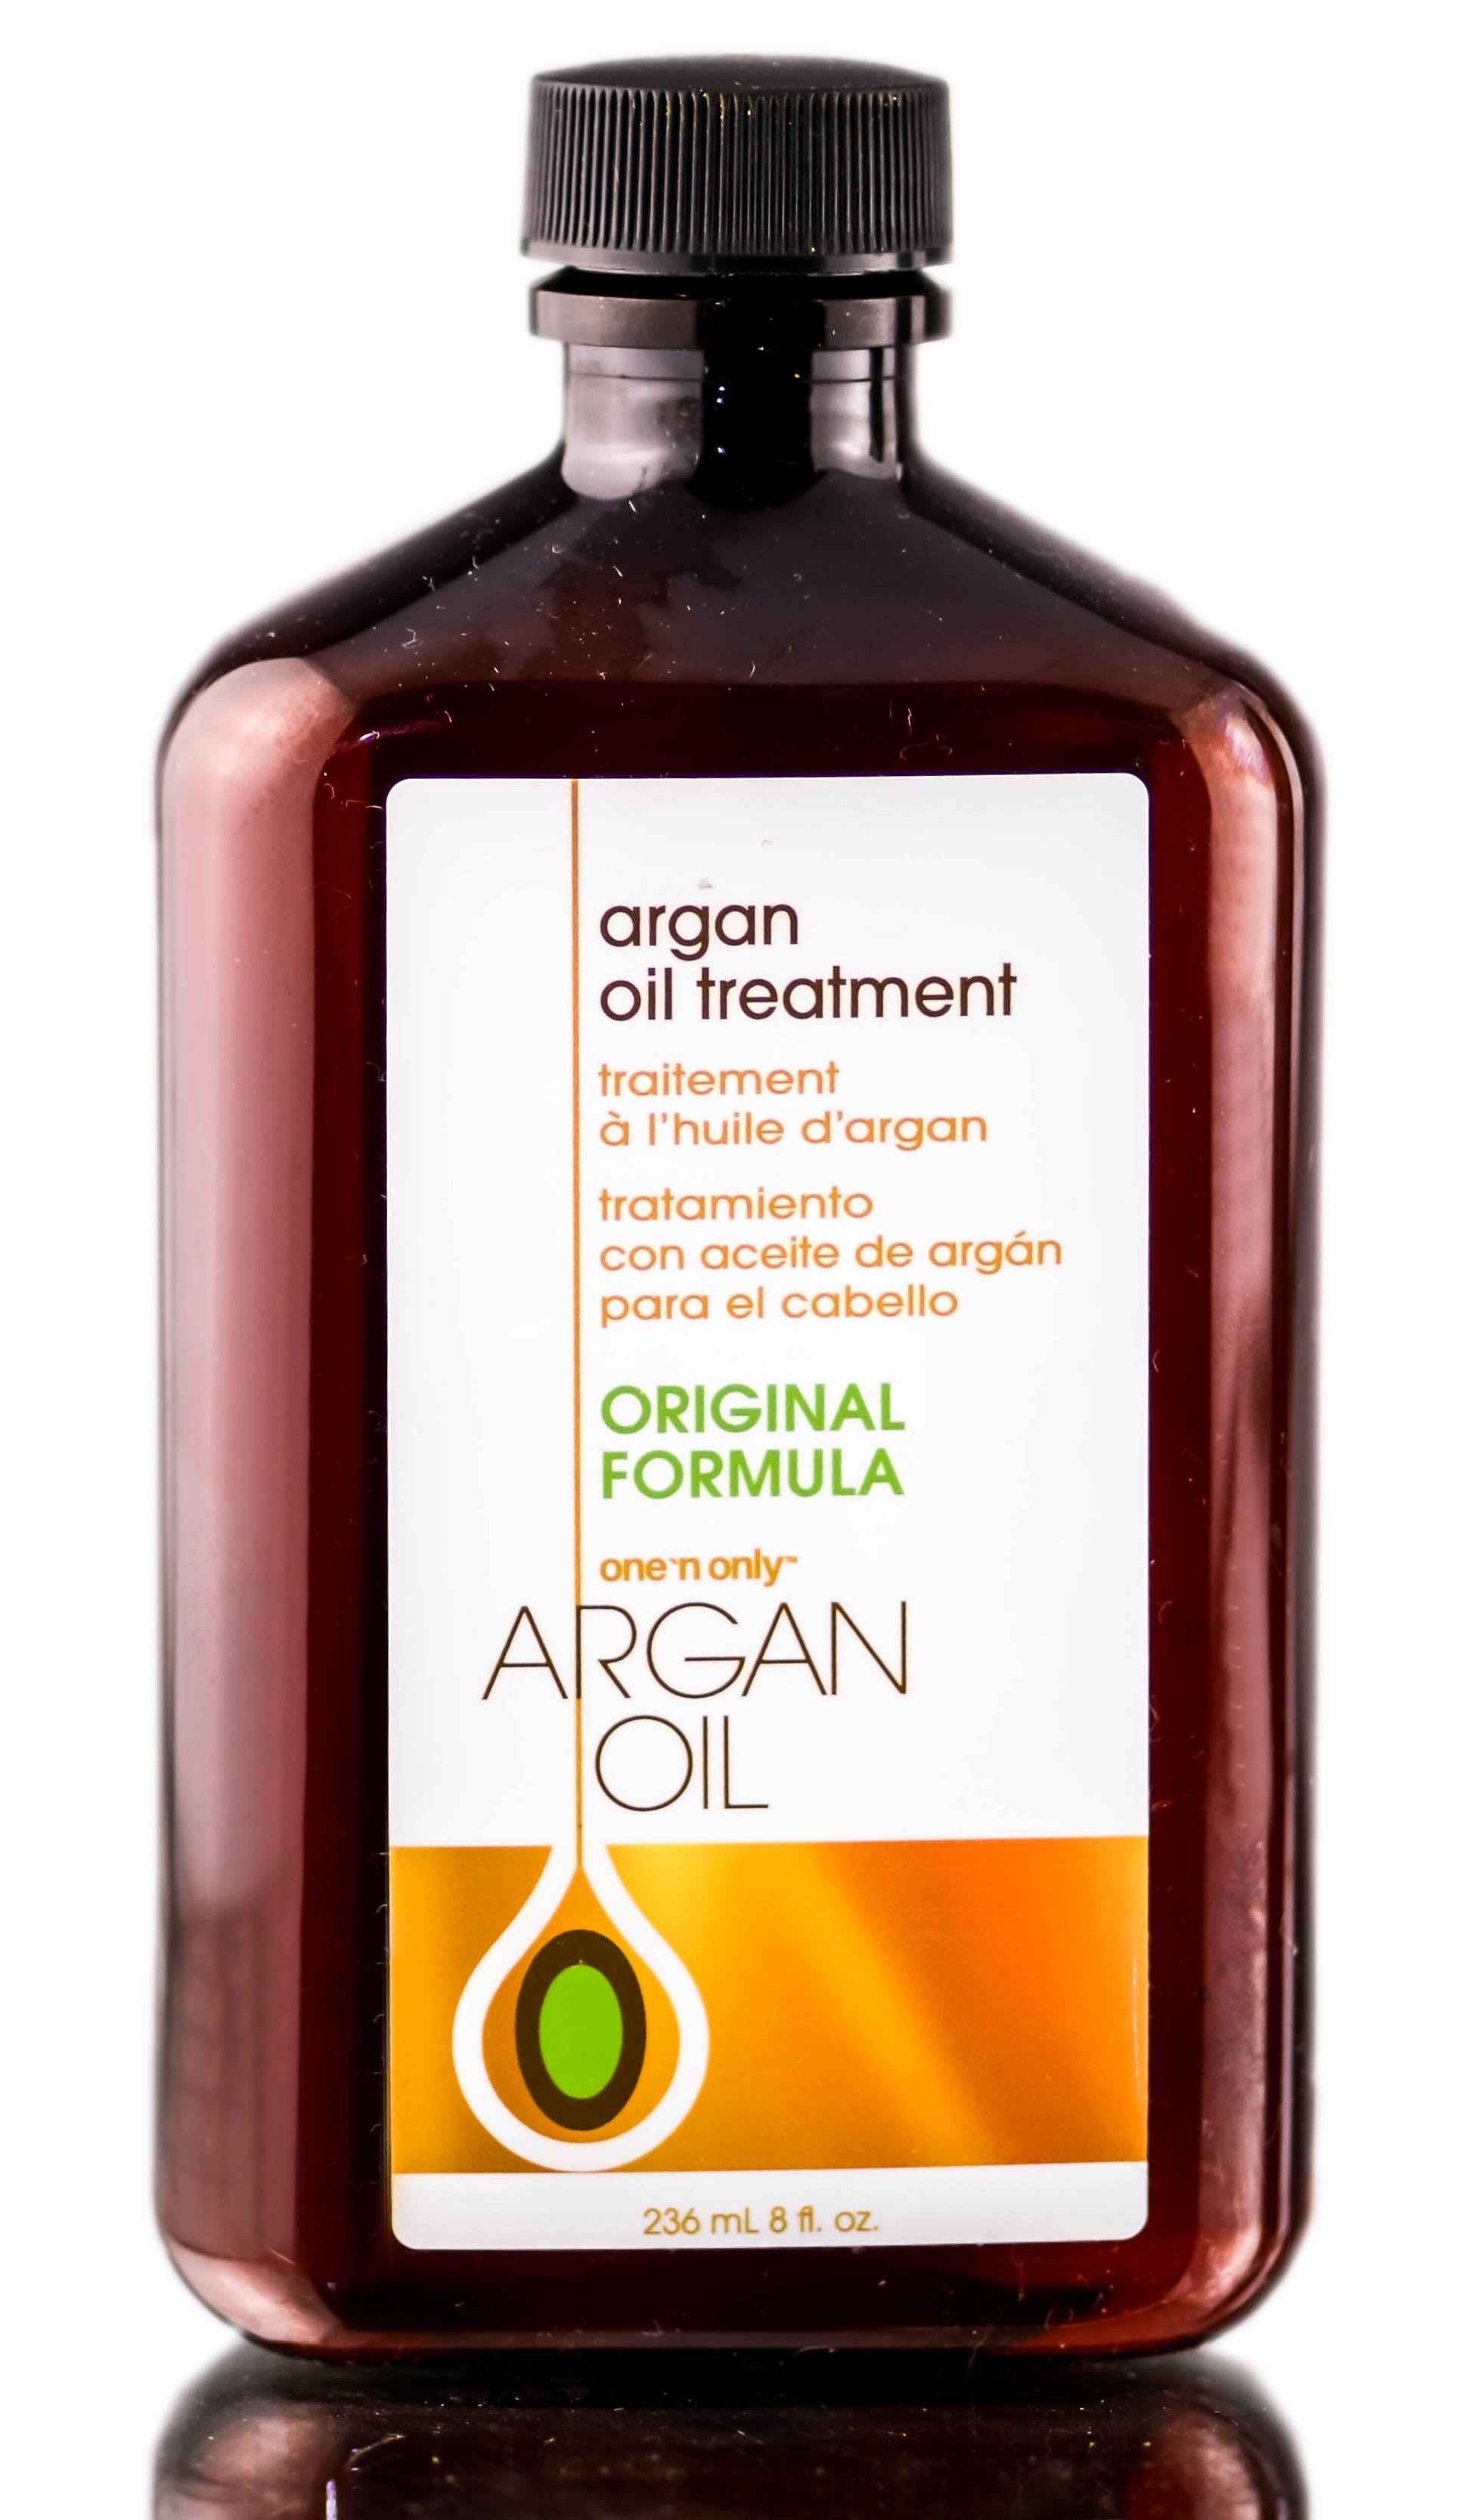 One n only argan oil treatment 8 oz